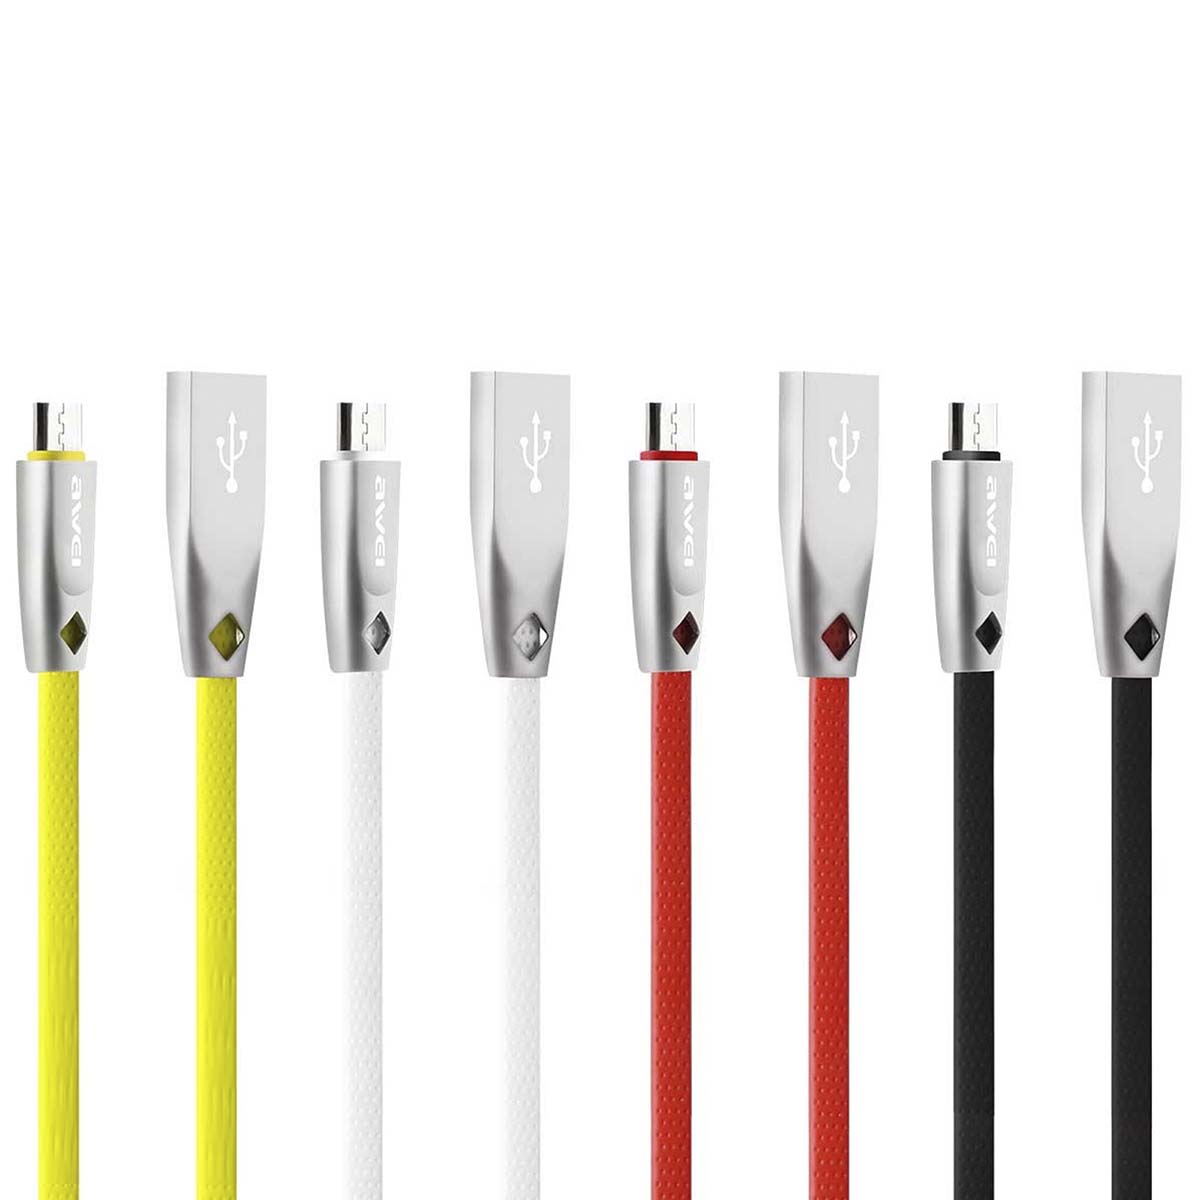 AWEI CL-96 FAST кабель Micro USB, 2.4A, длина 1 метр, цвет красный.